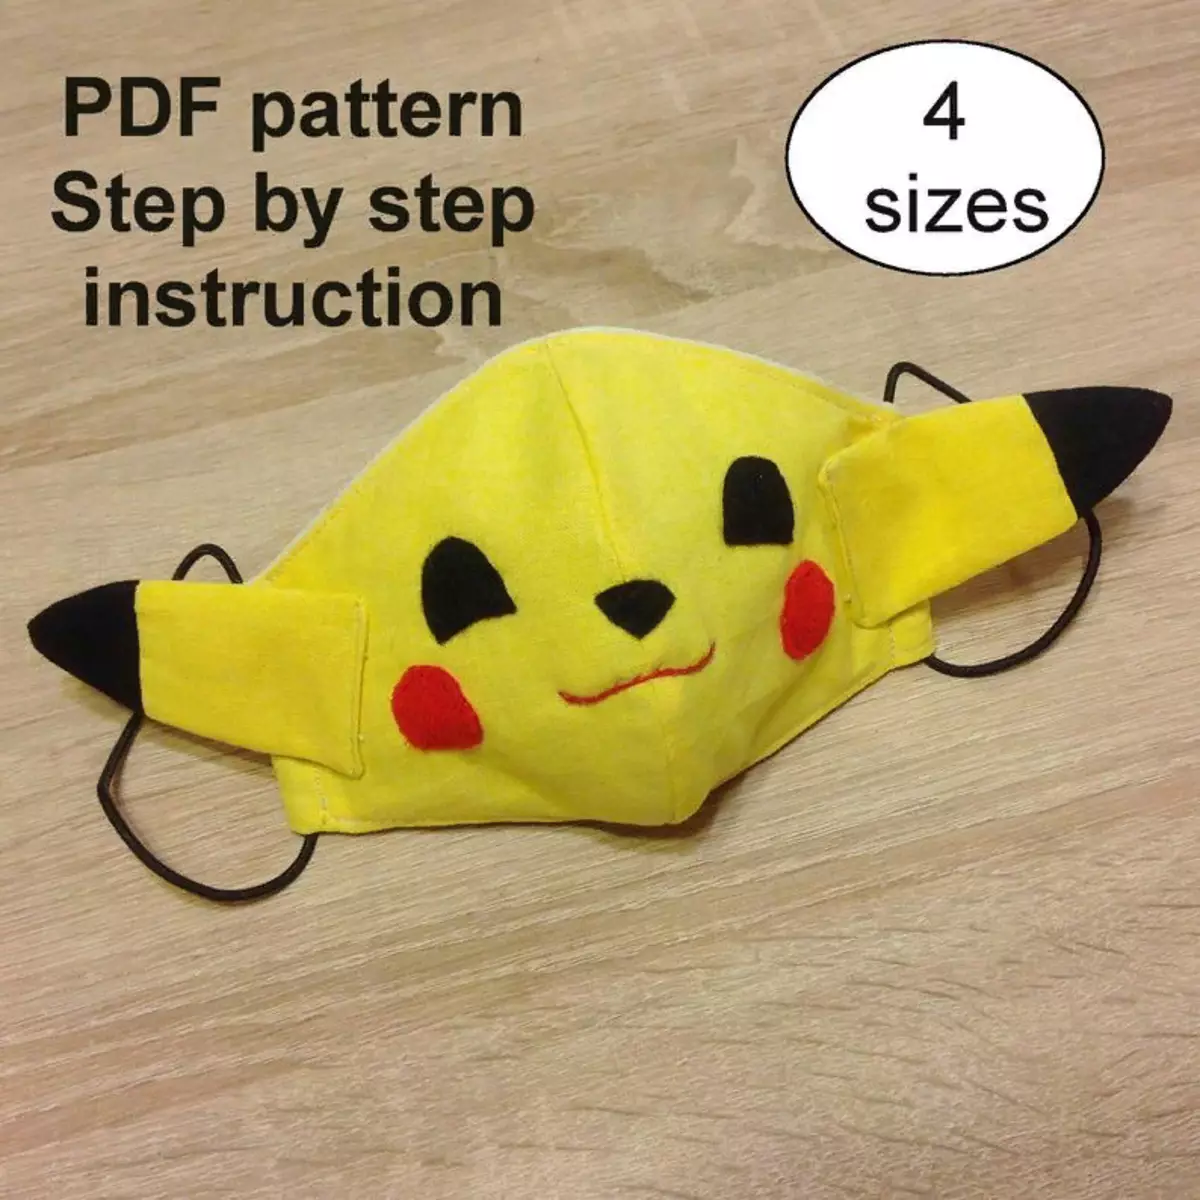 https://www.etsy.com/listing/847485427/pokemon-face-mask-pattern-pdf-pikachu?epik=dj0yjnu9v0c0oc11yzh2ee1yum9rcerkogo4uutgwhu3bffwt0wmcd0wjm49bwvrv3bbs1lvyzlaqji0dfjqvkddzyz0pufbqufbrl94eukw